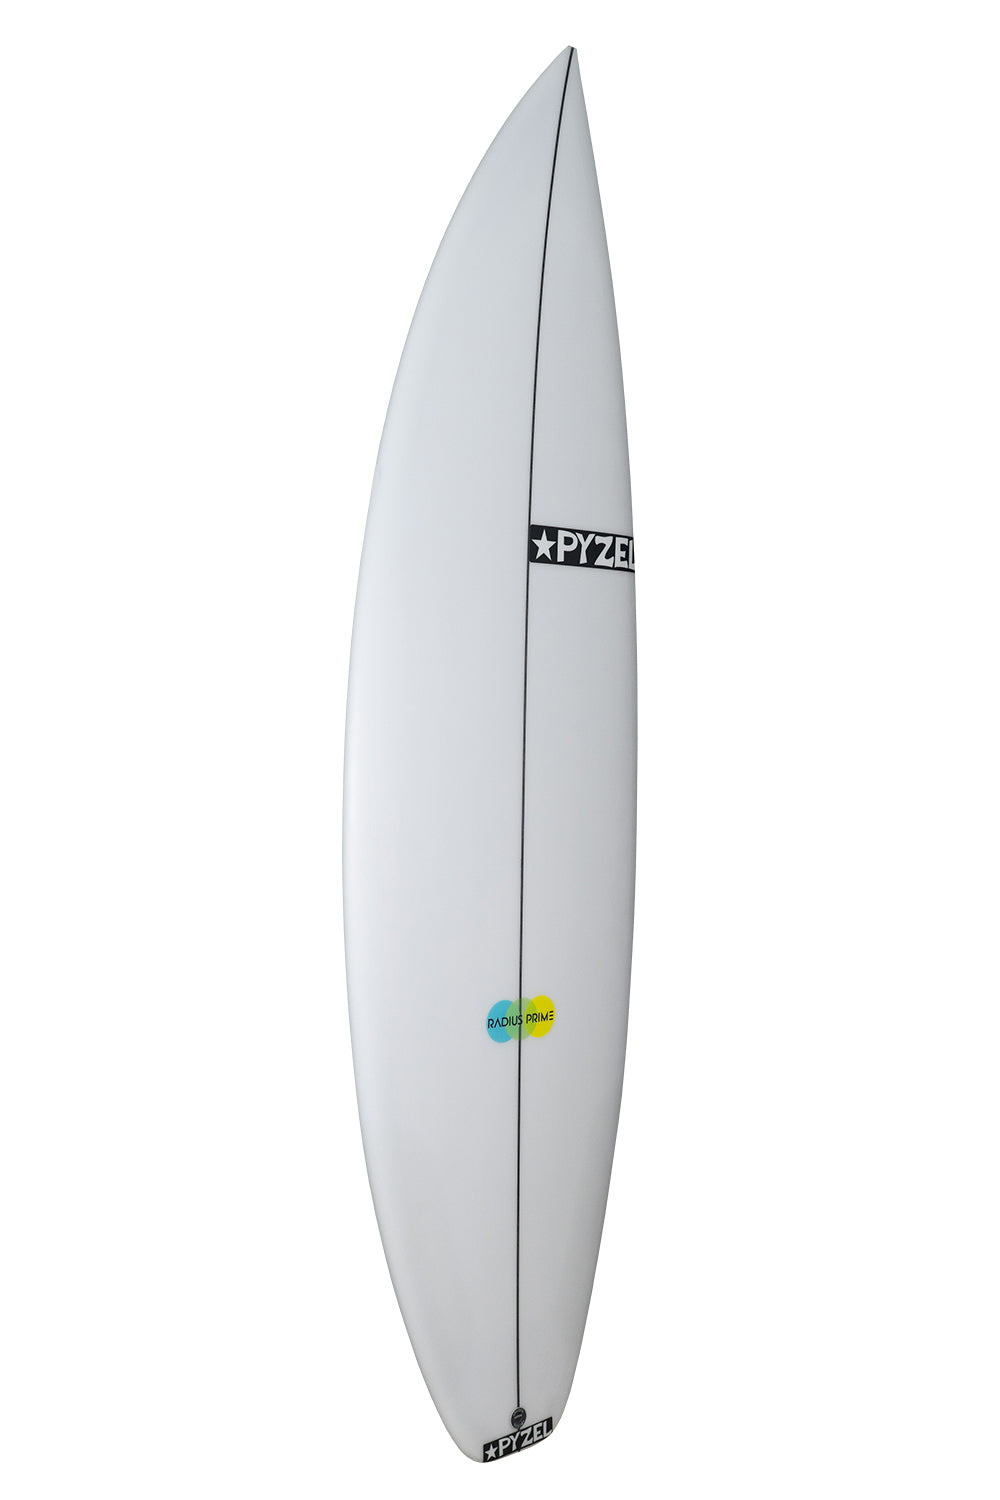 Pyzel Radius Prime Surfboard - Squash Tail